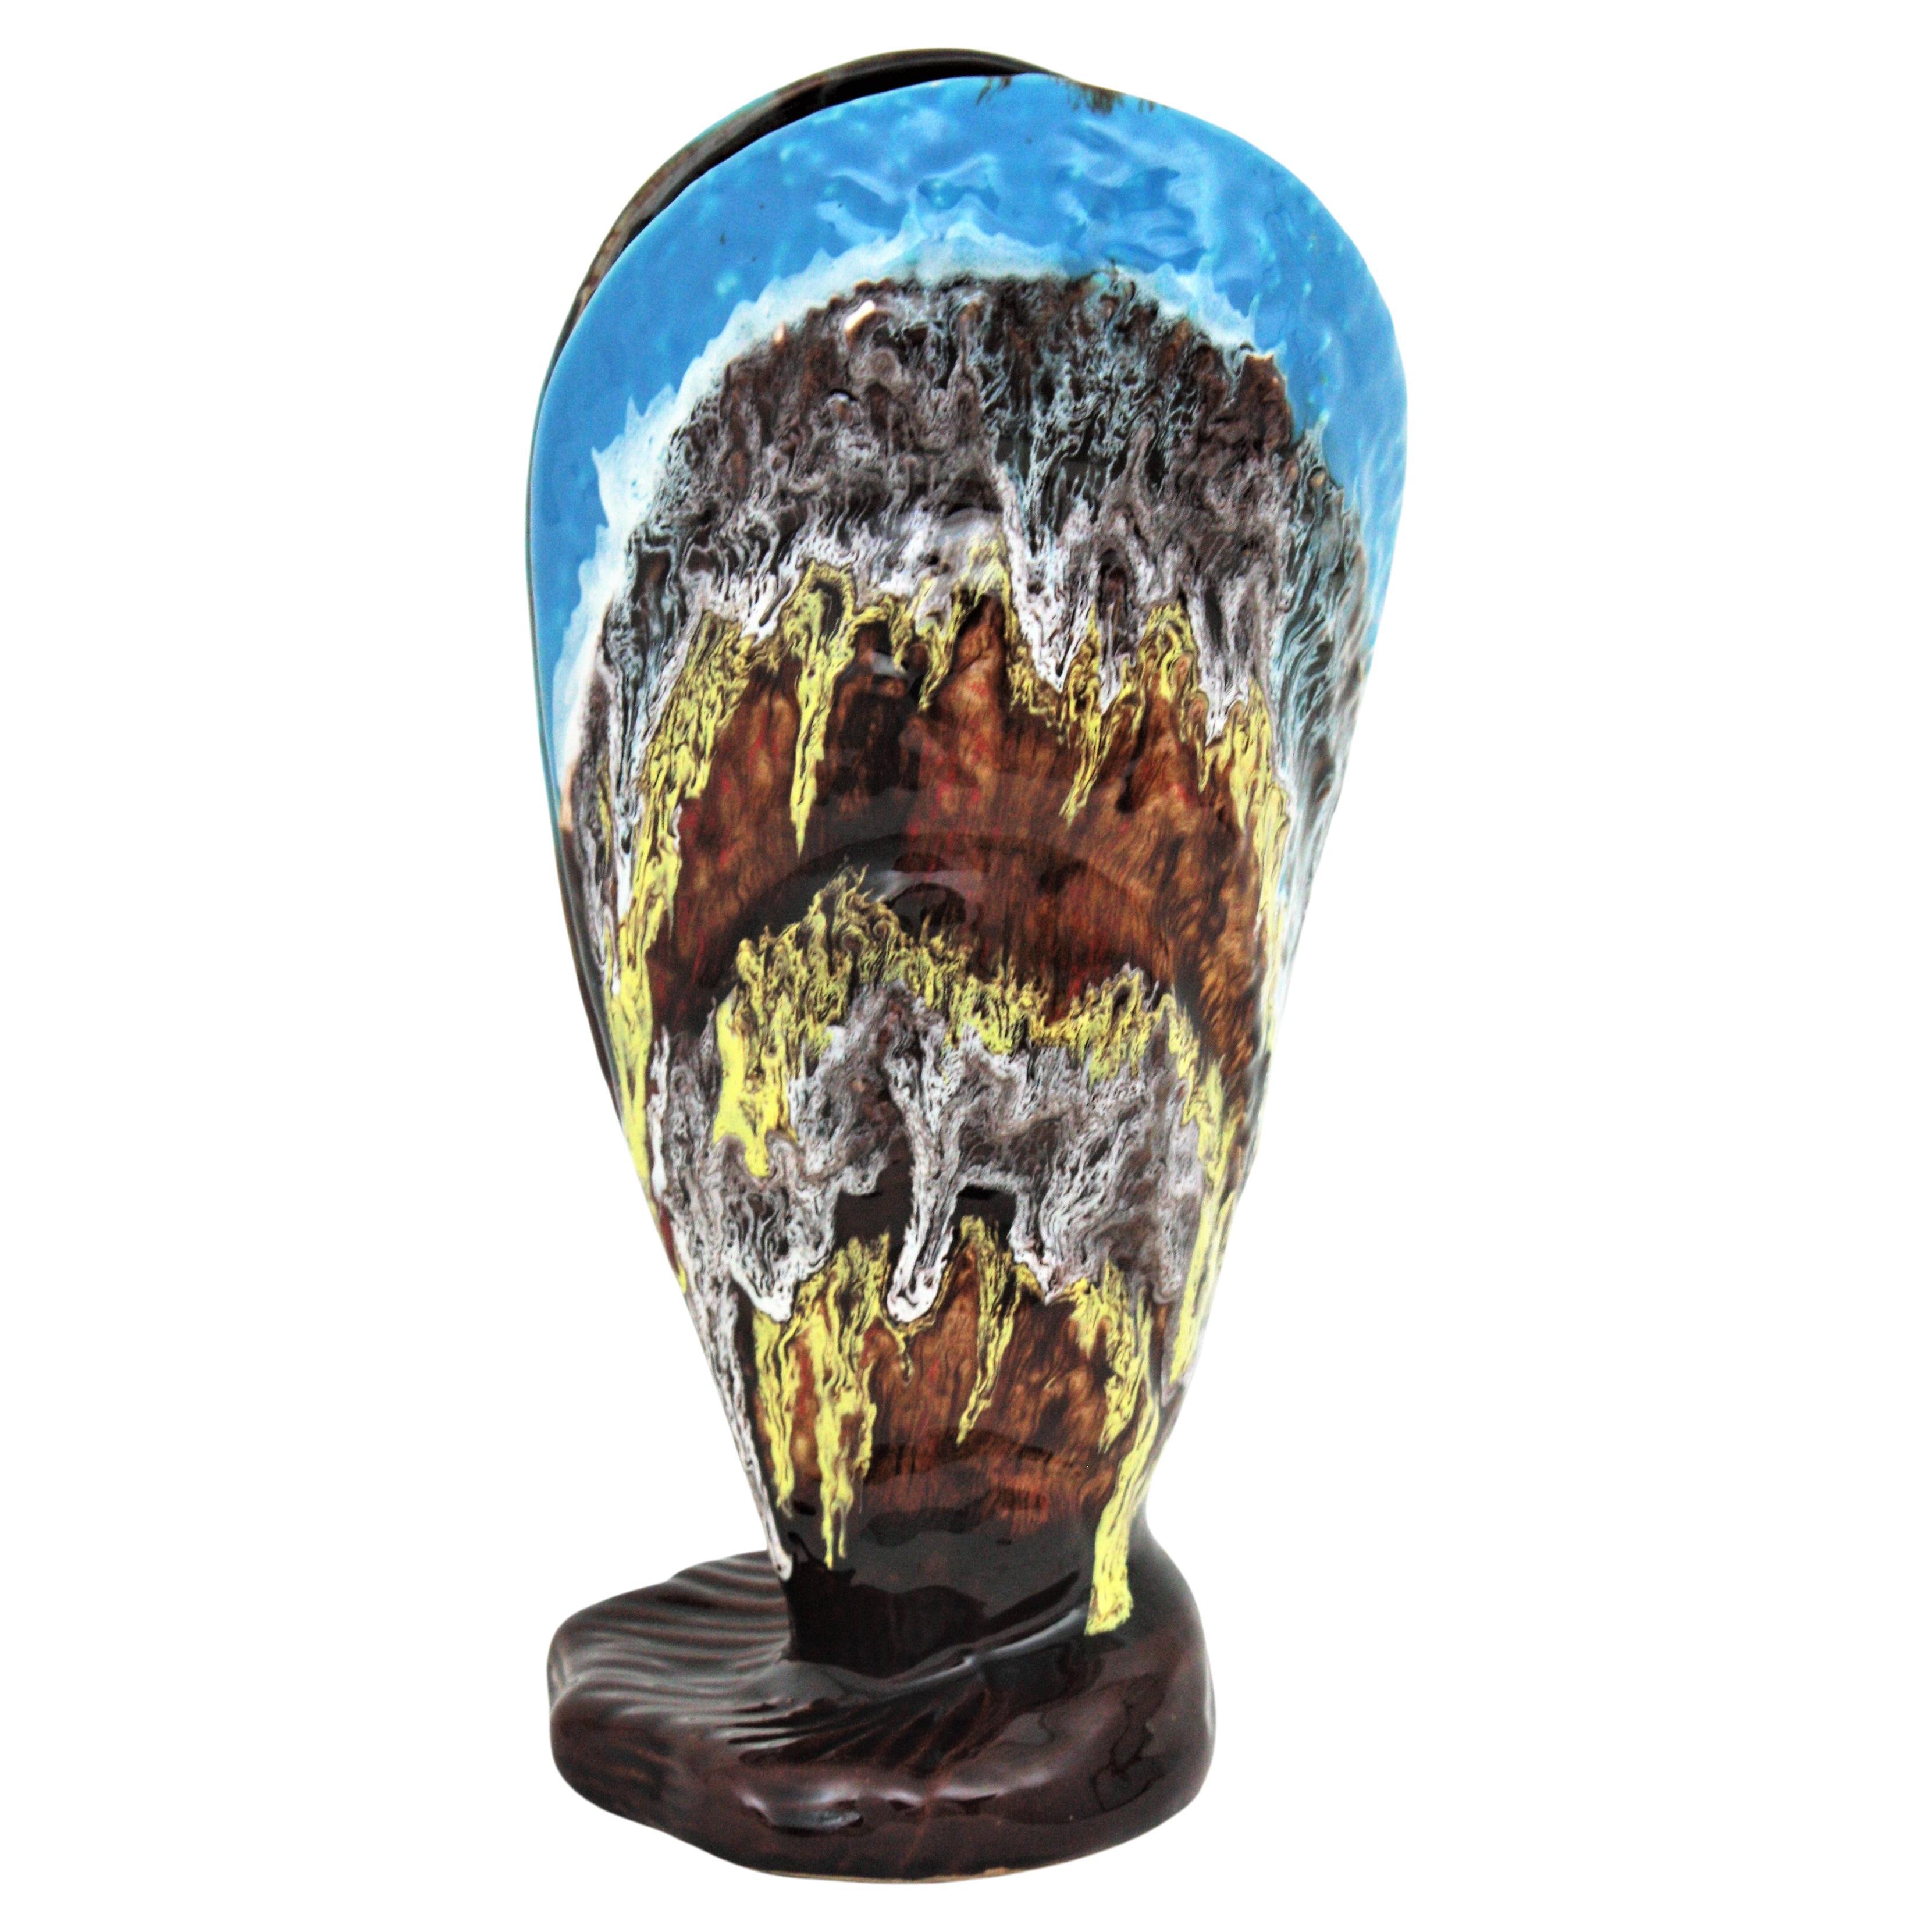 French Vallauris Majolica Shell Shaped Vase in Multi Color Glazed Ceramic For Sale